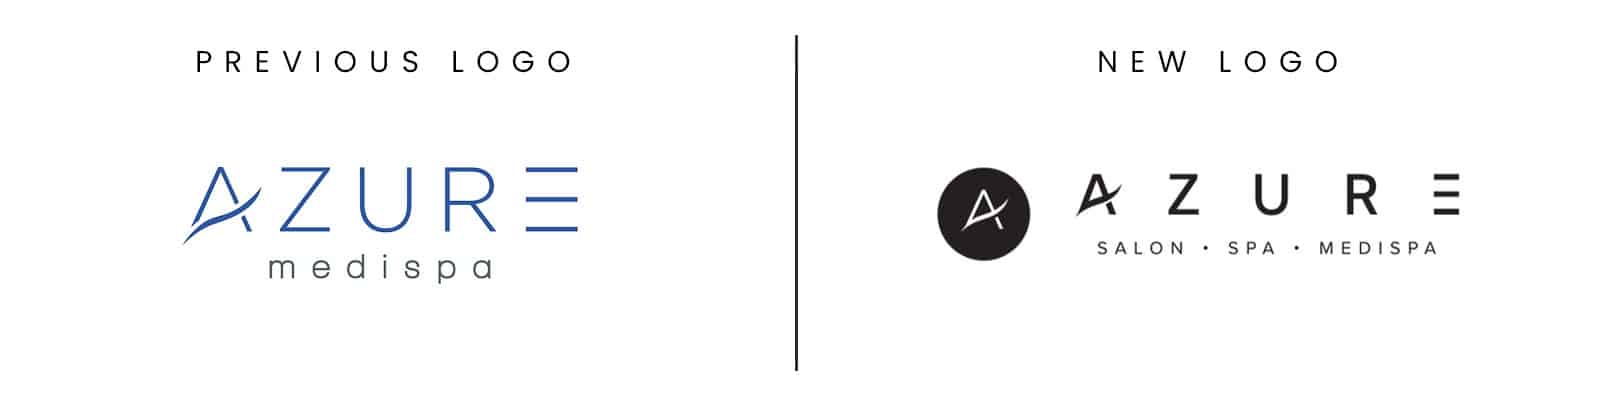 Azure logo comparison